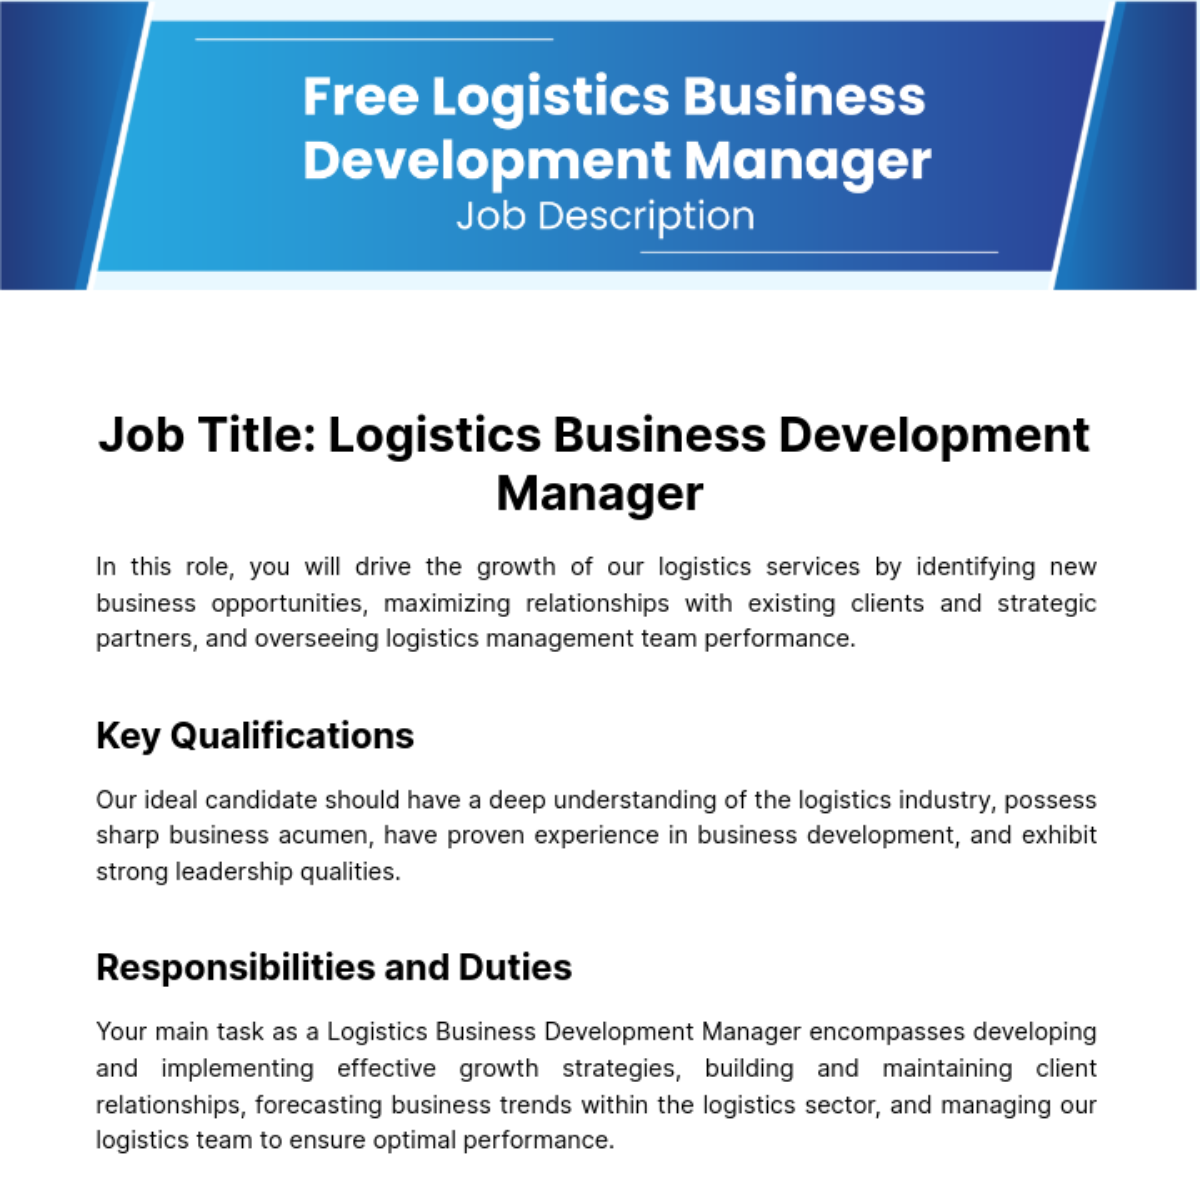 Free Logistics Business Development Manager Job Description Template